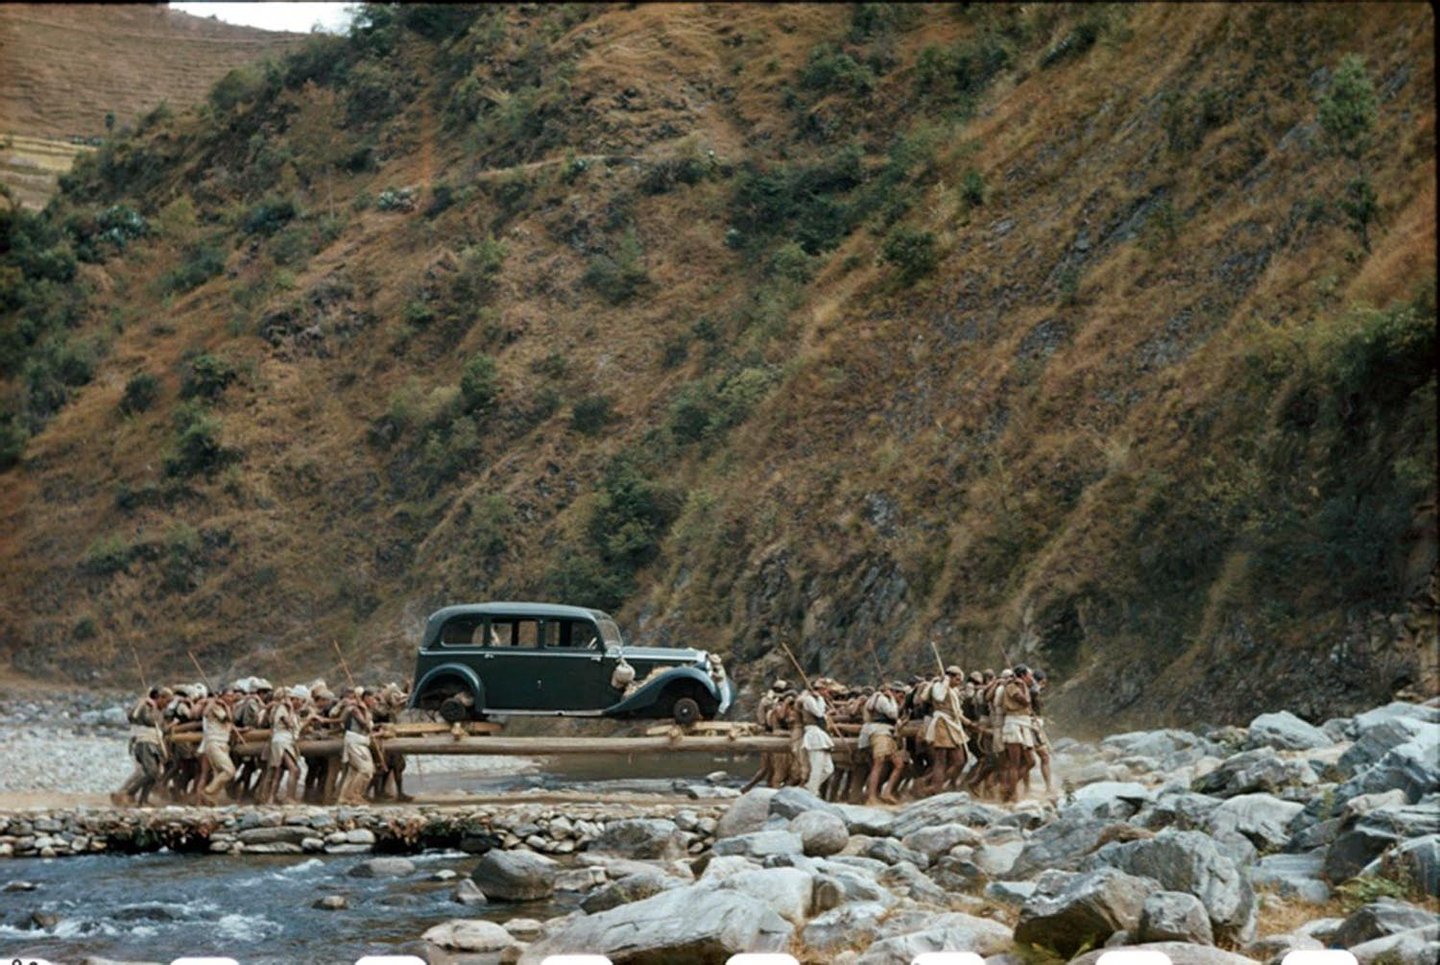 http://observador.pt/wp-content/uploads/2016/01/porters-transport-a-car-on-long-poles-across-a-stream-in-nepal-1948-volkmar-wentzel.jpg